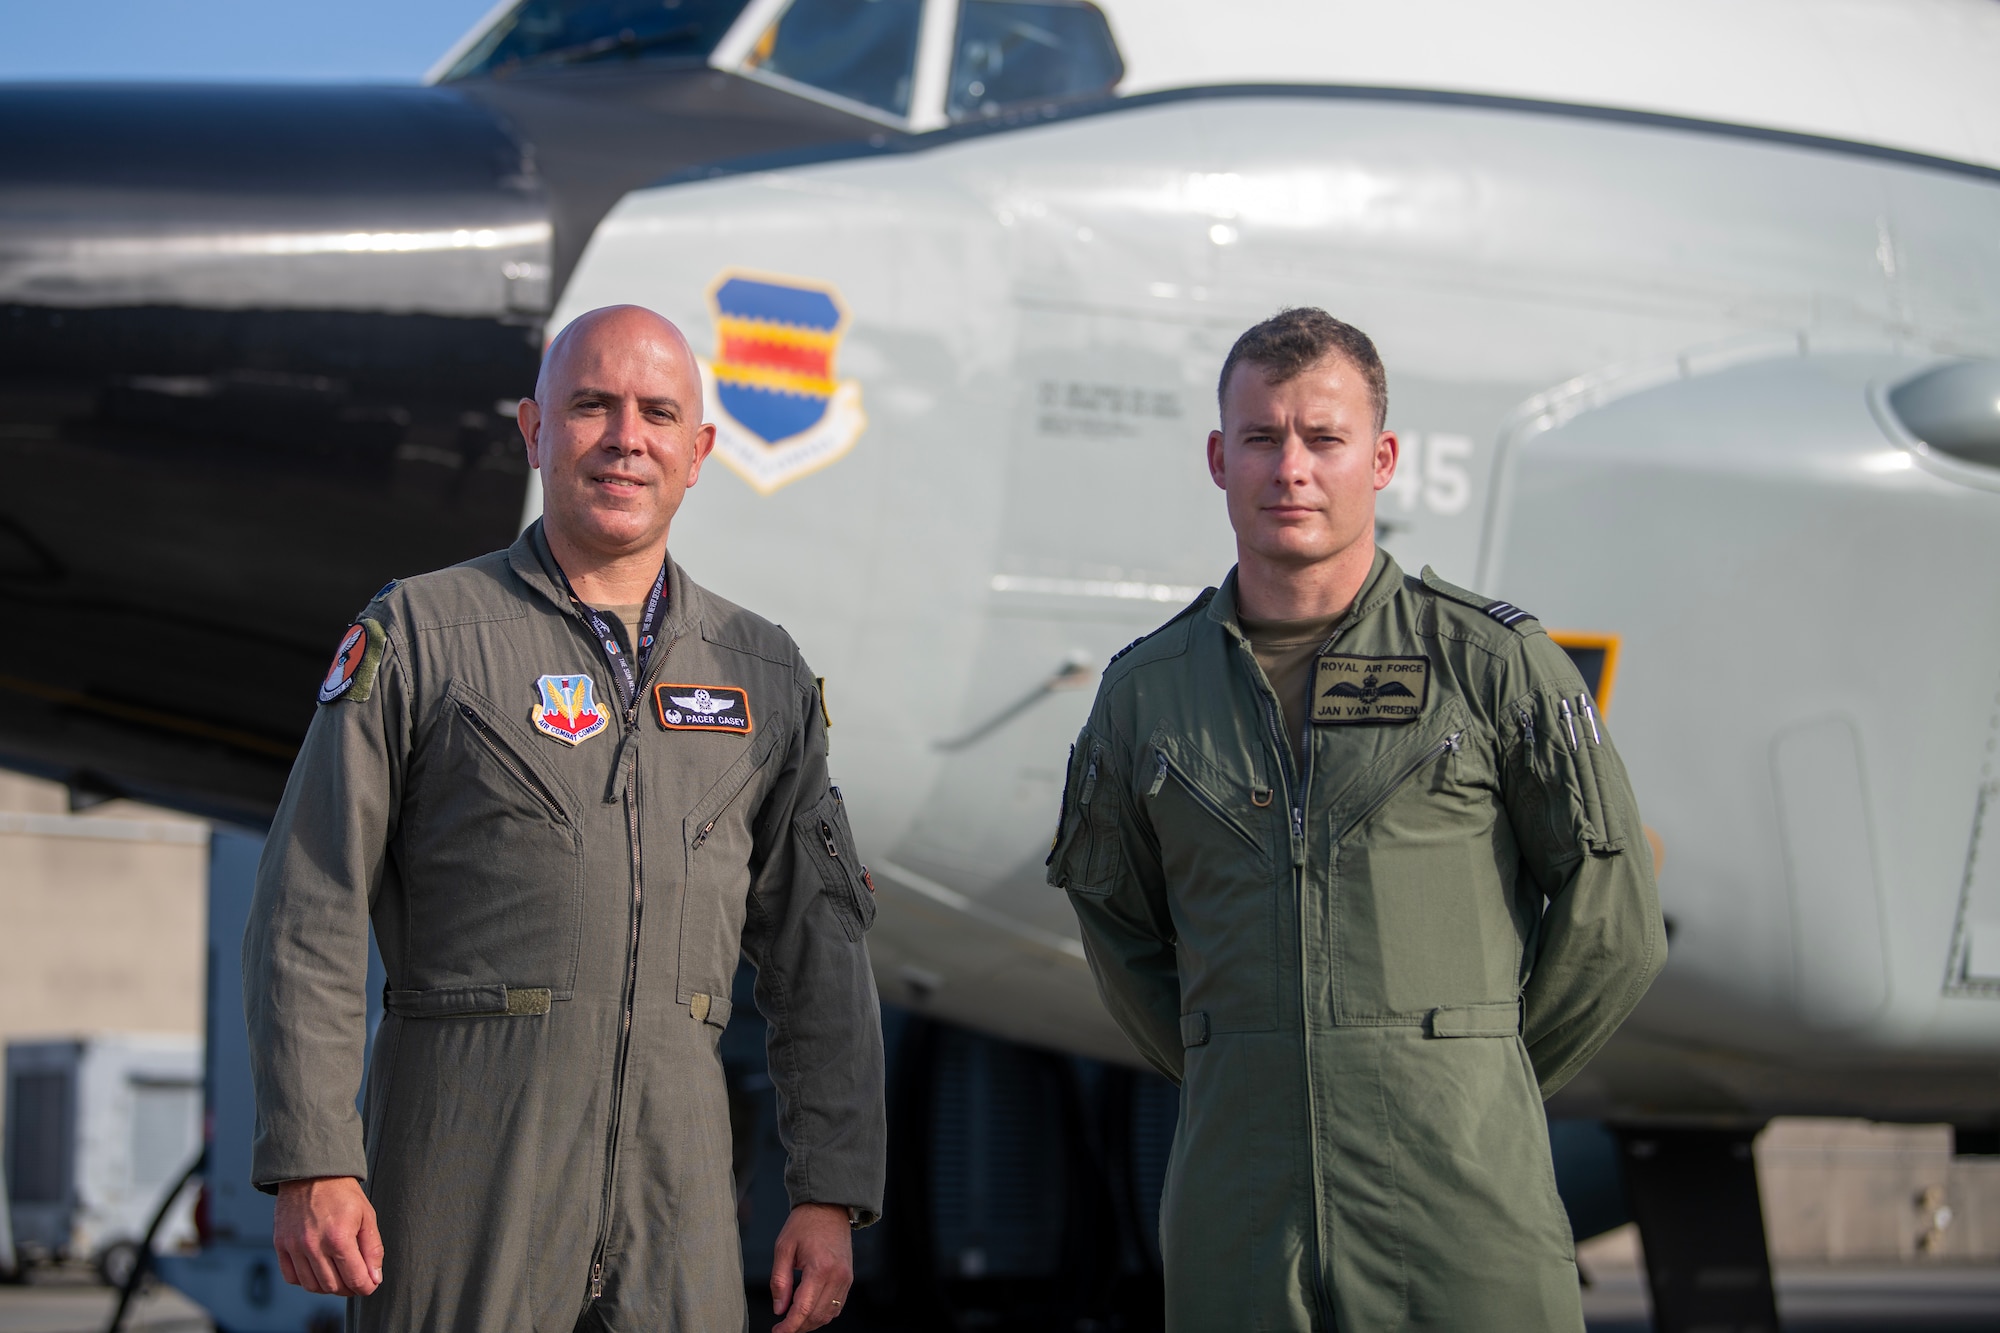 Lt. Col. John Casey poses in front of an RC-135 Rivet Joint with Flt. Lt. Jan Van Vreden